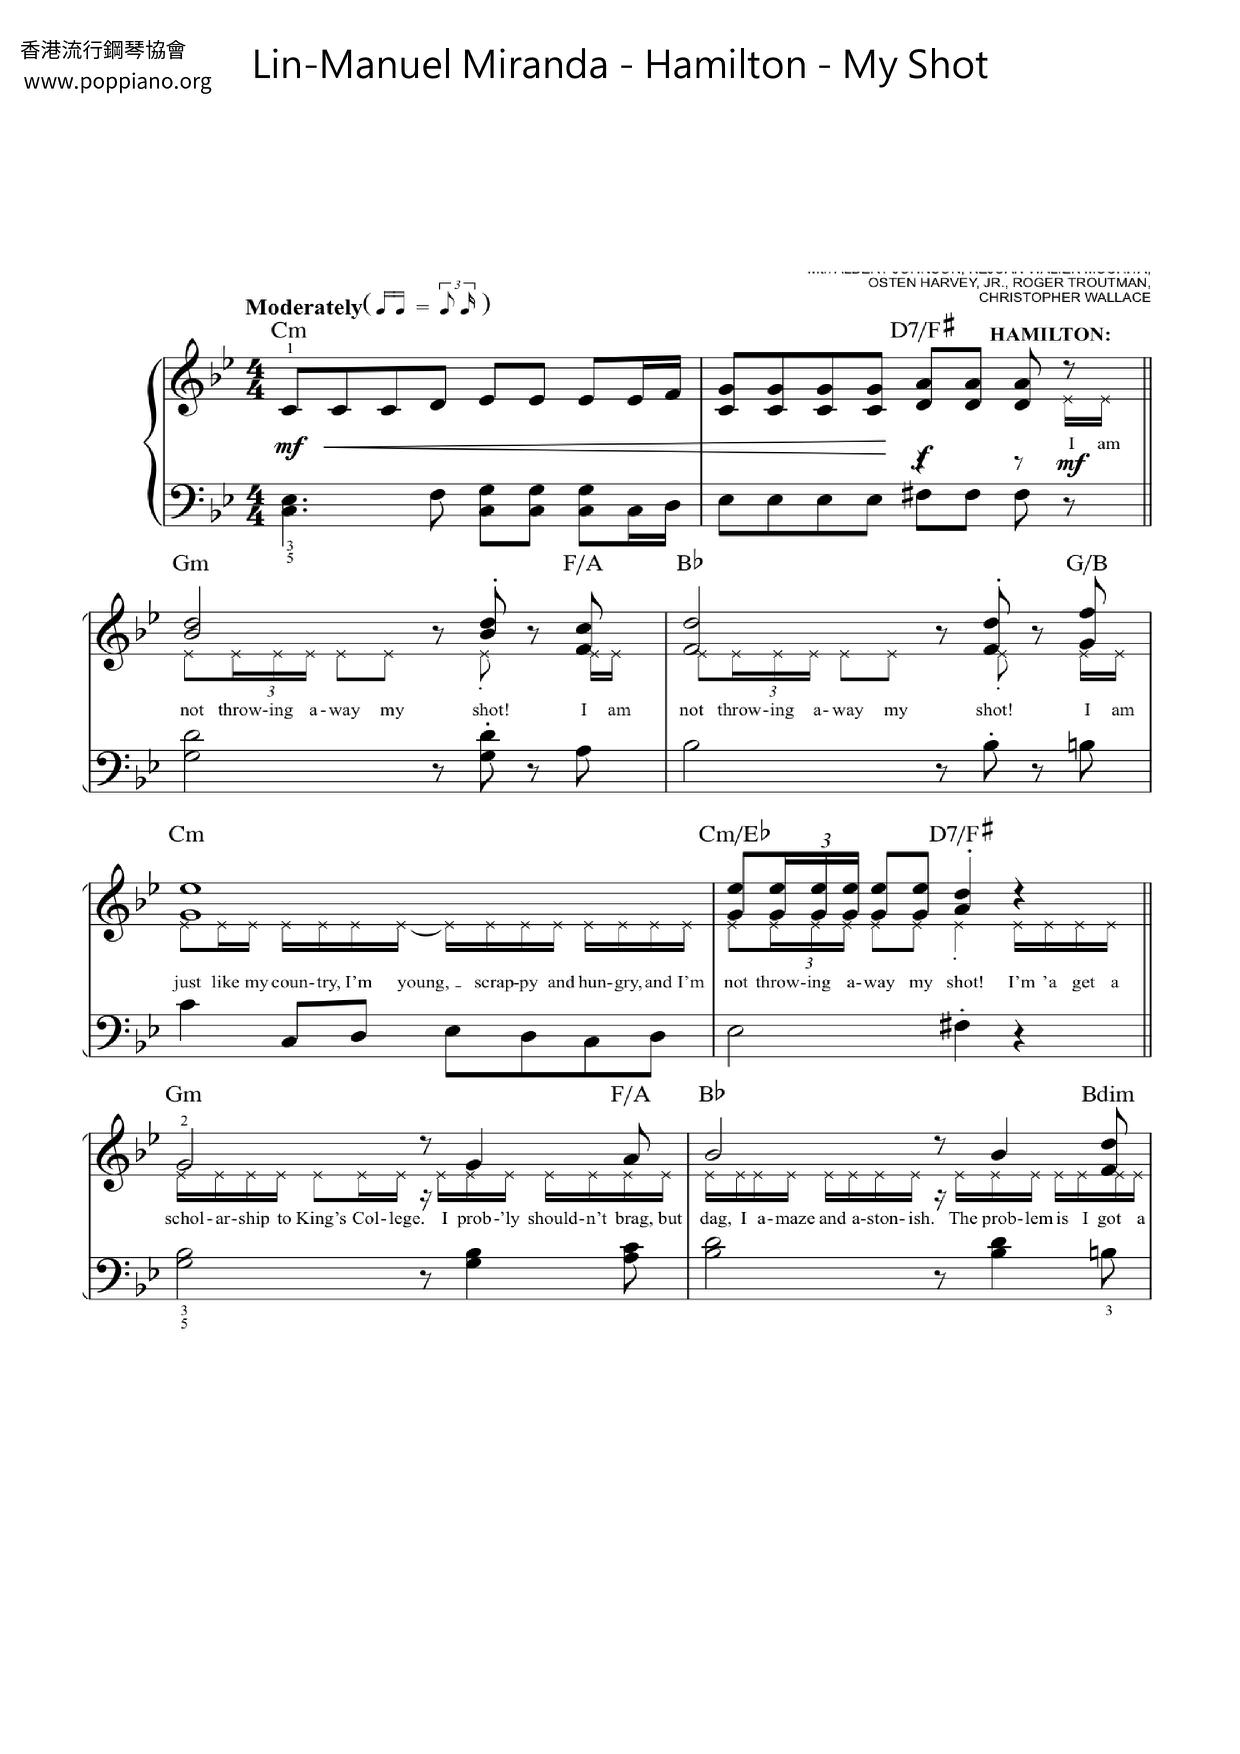 Hamilton - My Shotピアノ譜